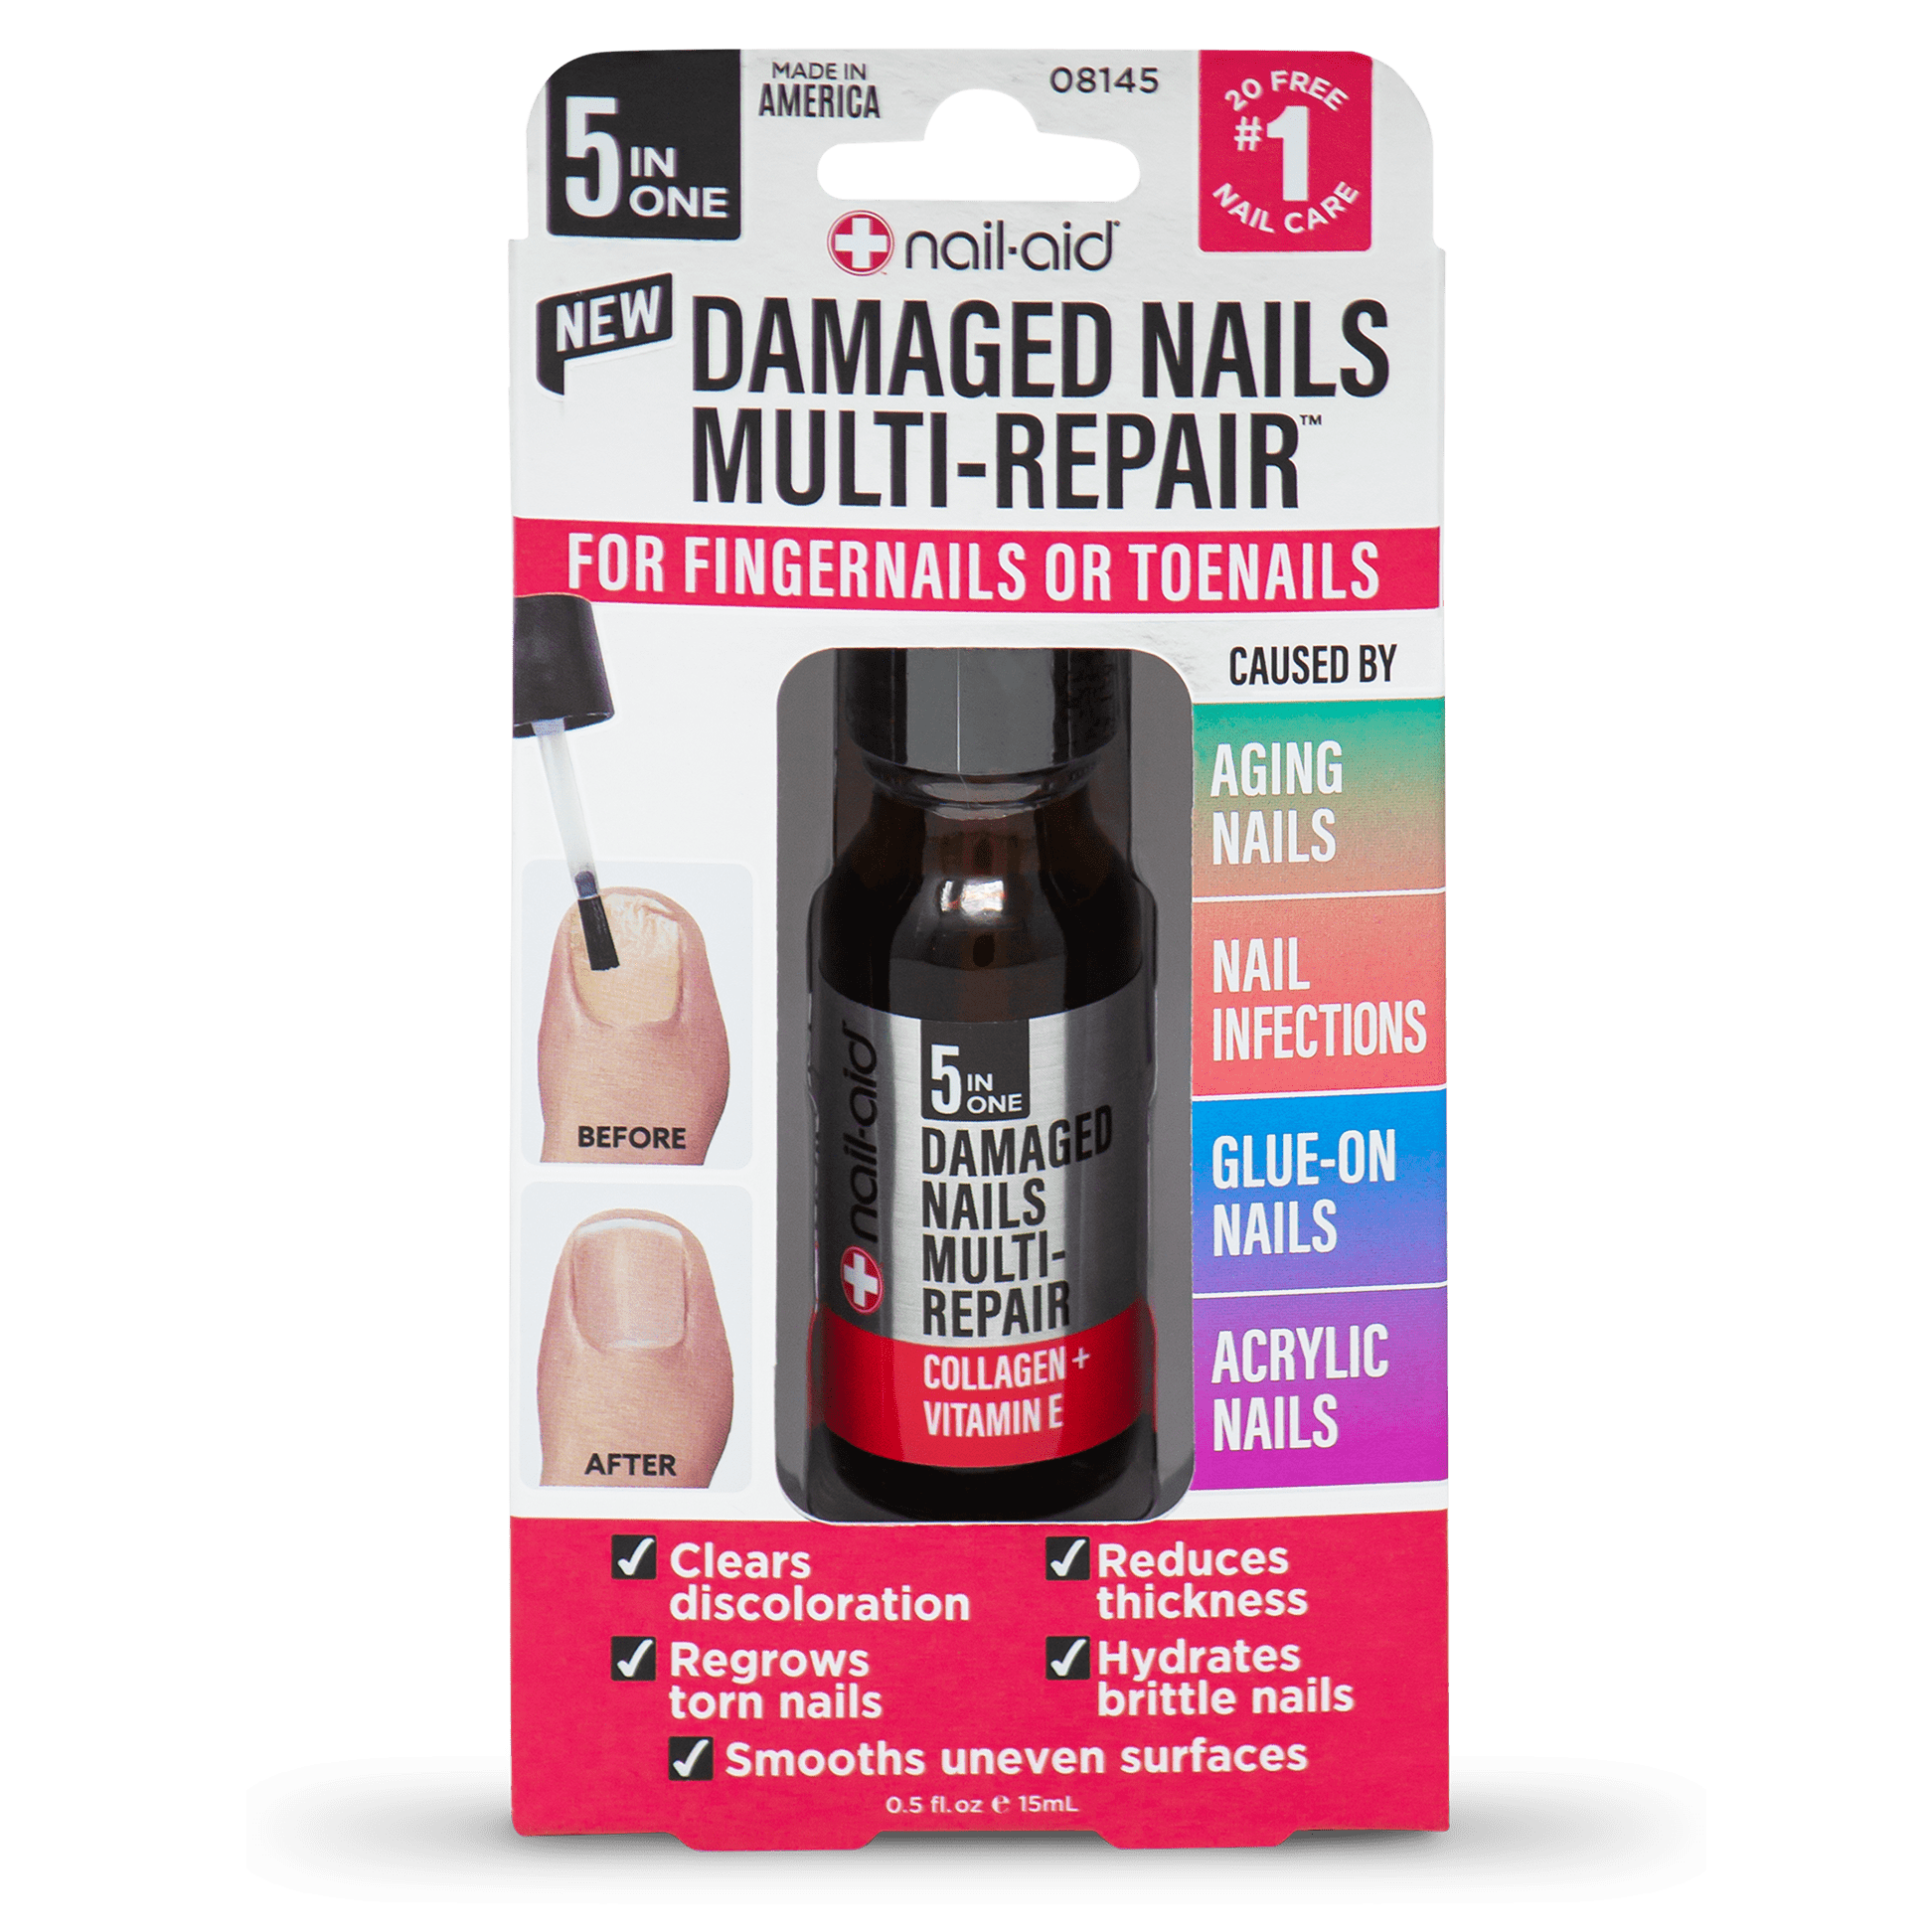 Nail Aid 5 in 1 Damaged Nails Multi Repair for Fingernails or Toenails 8cf47f20 87bd 4458 8313 ce04824dc88d.818787b43f9bbaef1123c11cb0c6ce24